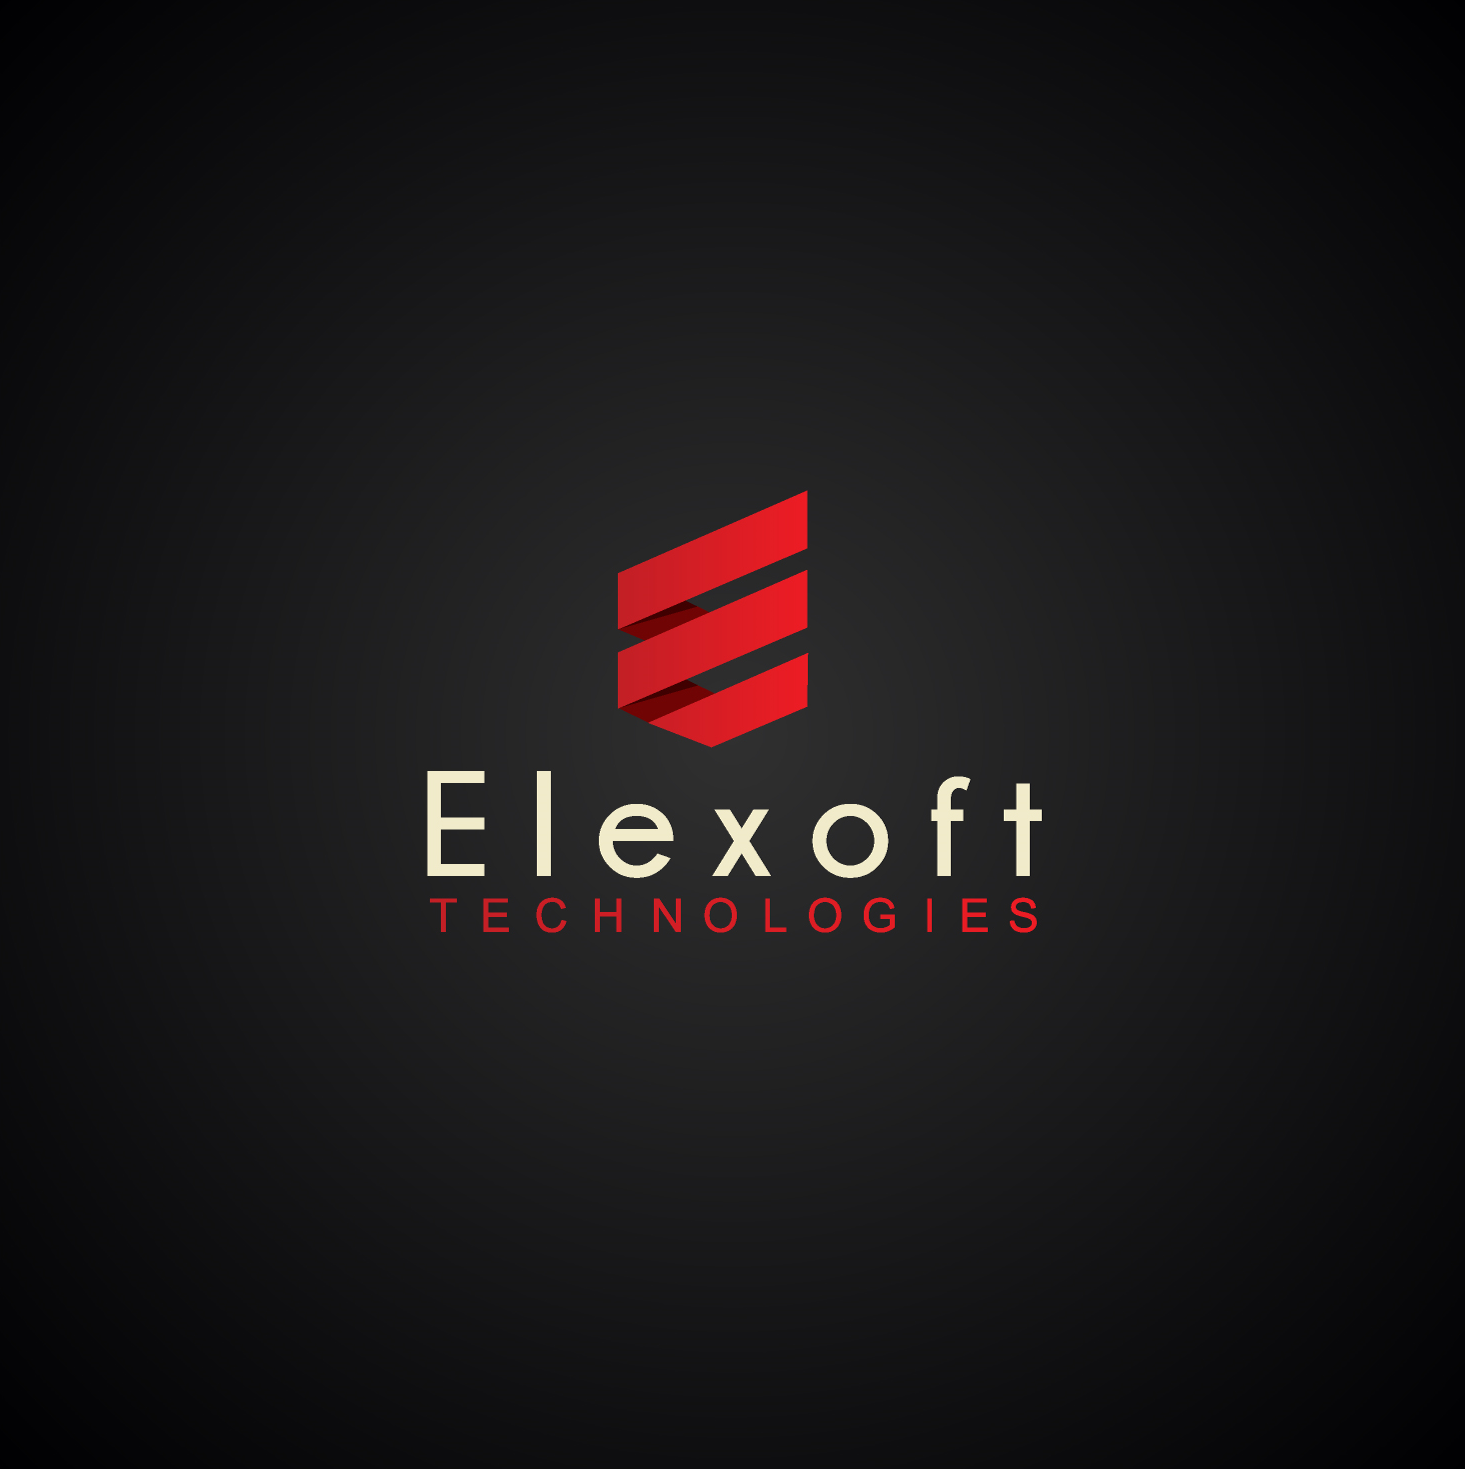 Elexoft Technologies profile on Qualified.One